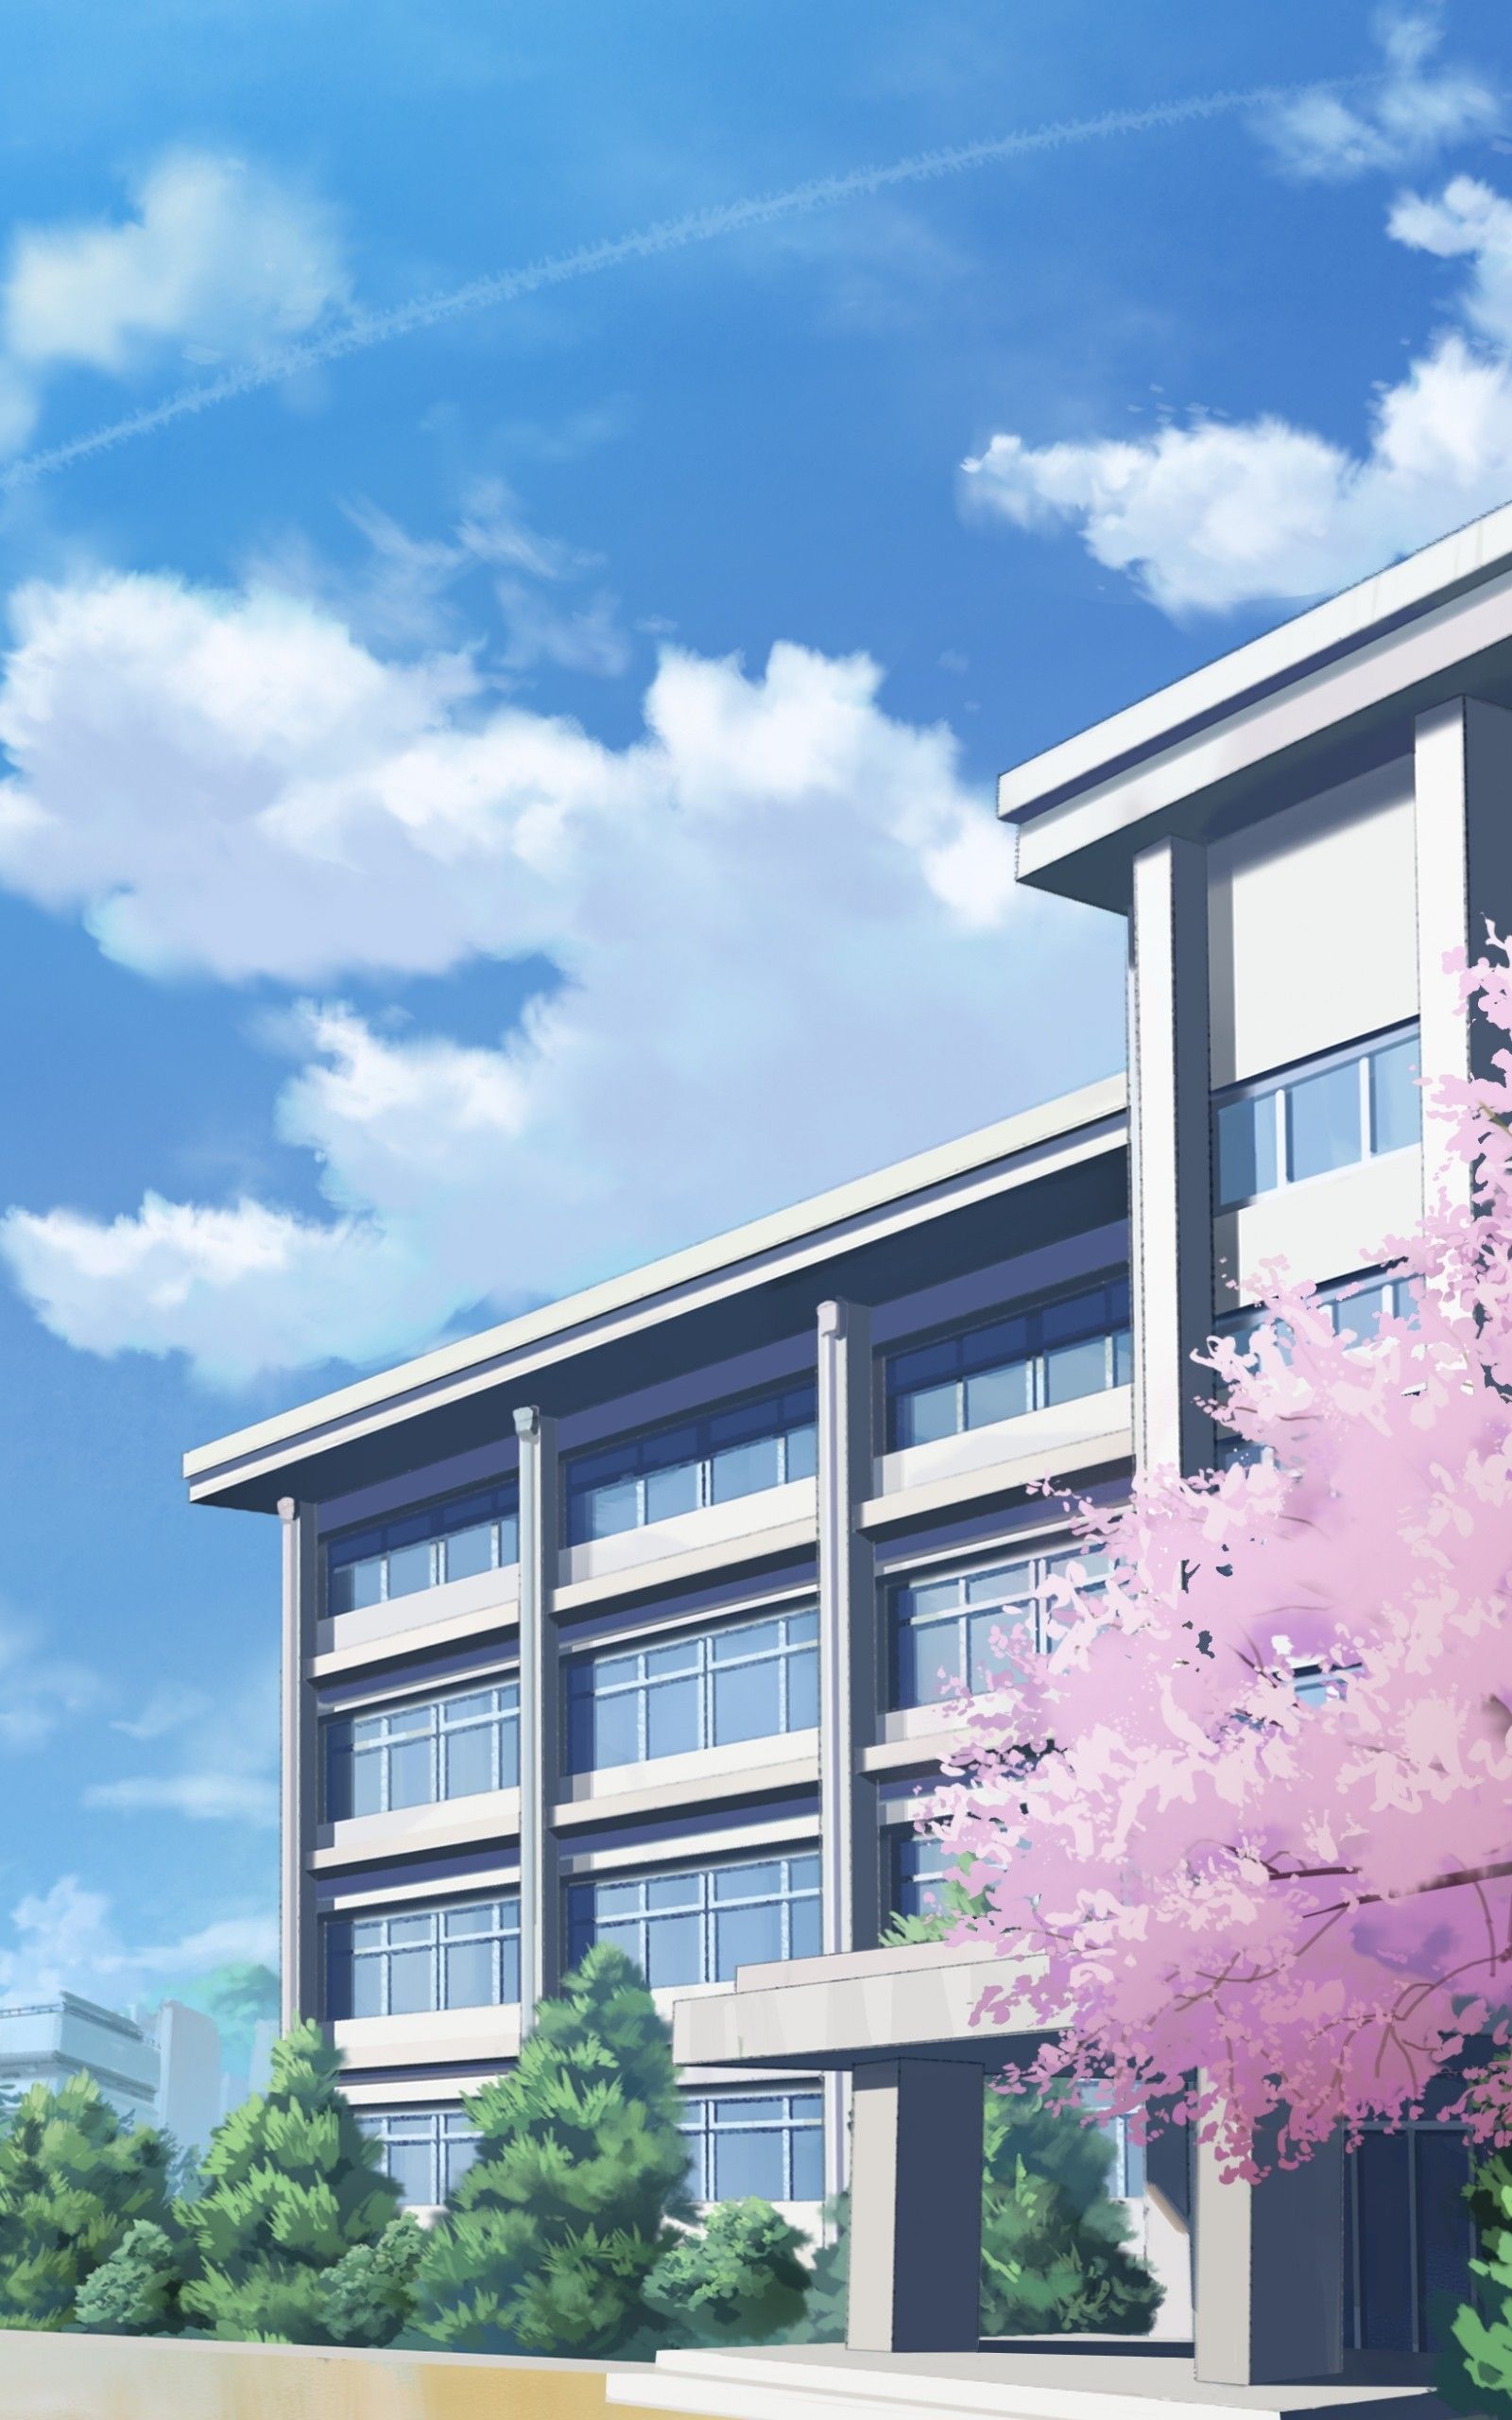 Download 1600x2560 Anime School, Building, Sakura Blossom, Clouds Wallpaper for Google Nexus 10